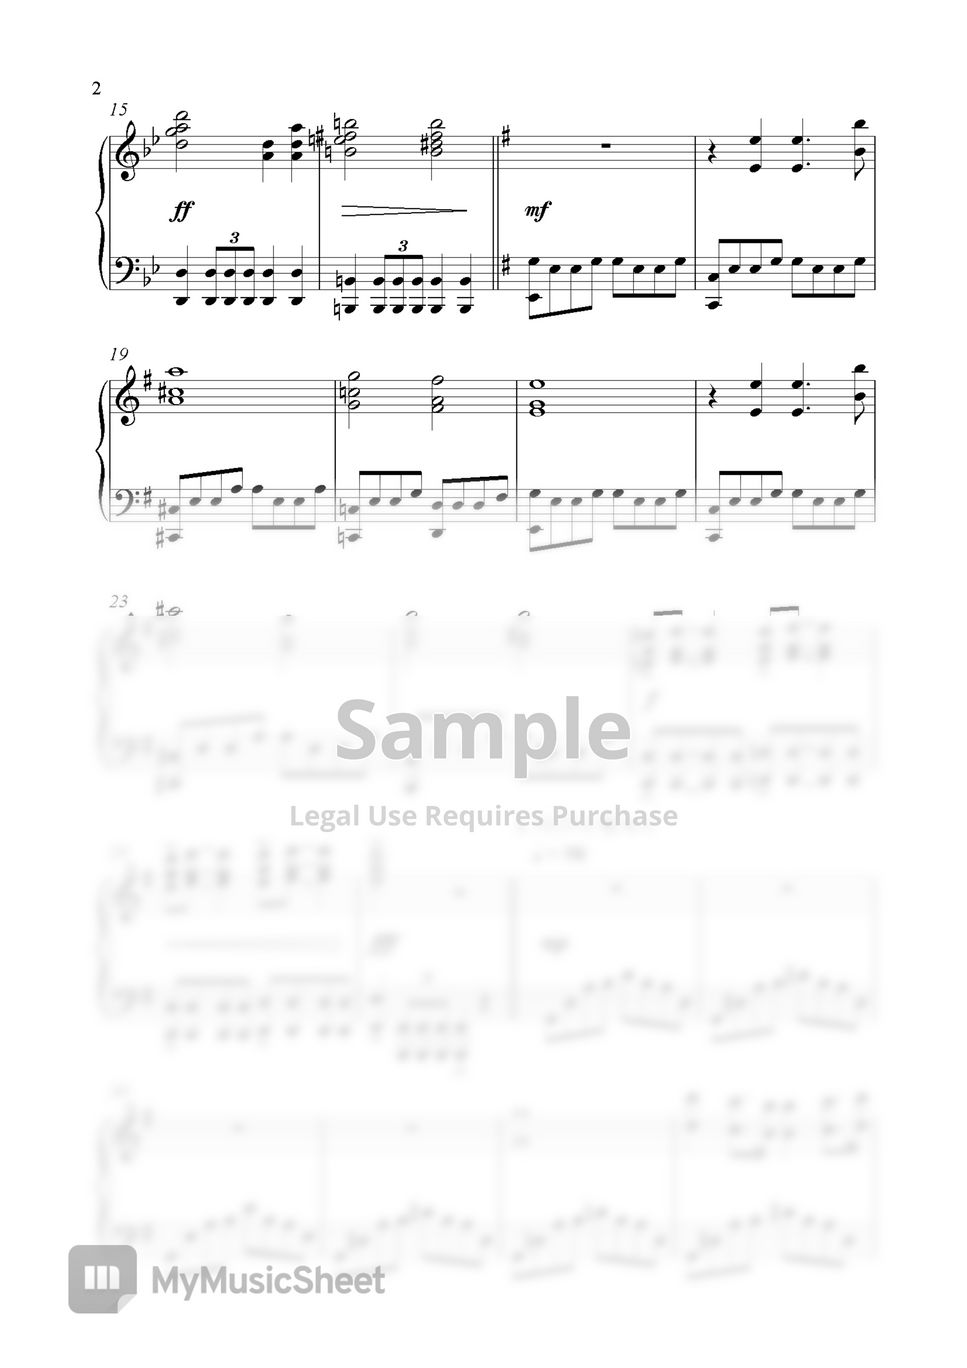 Alan Silvestri - The Avengers Theme(5 Style) (Piano Version) by GoGoPiano